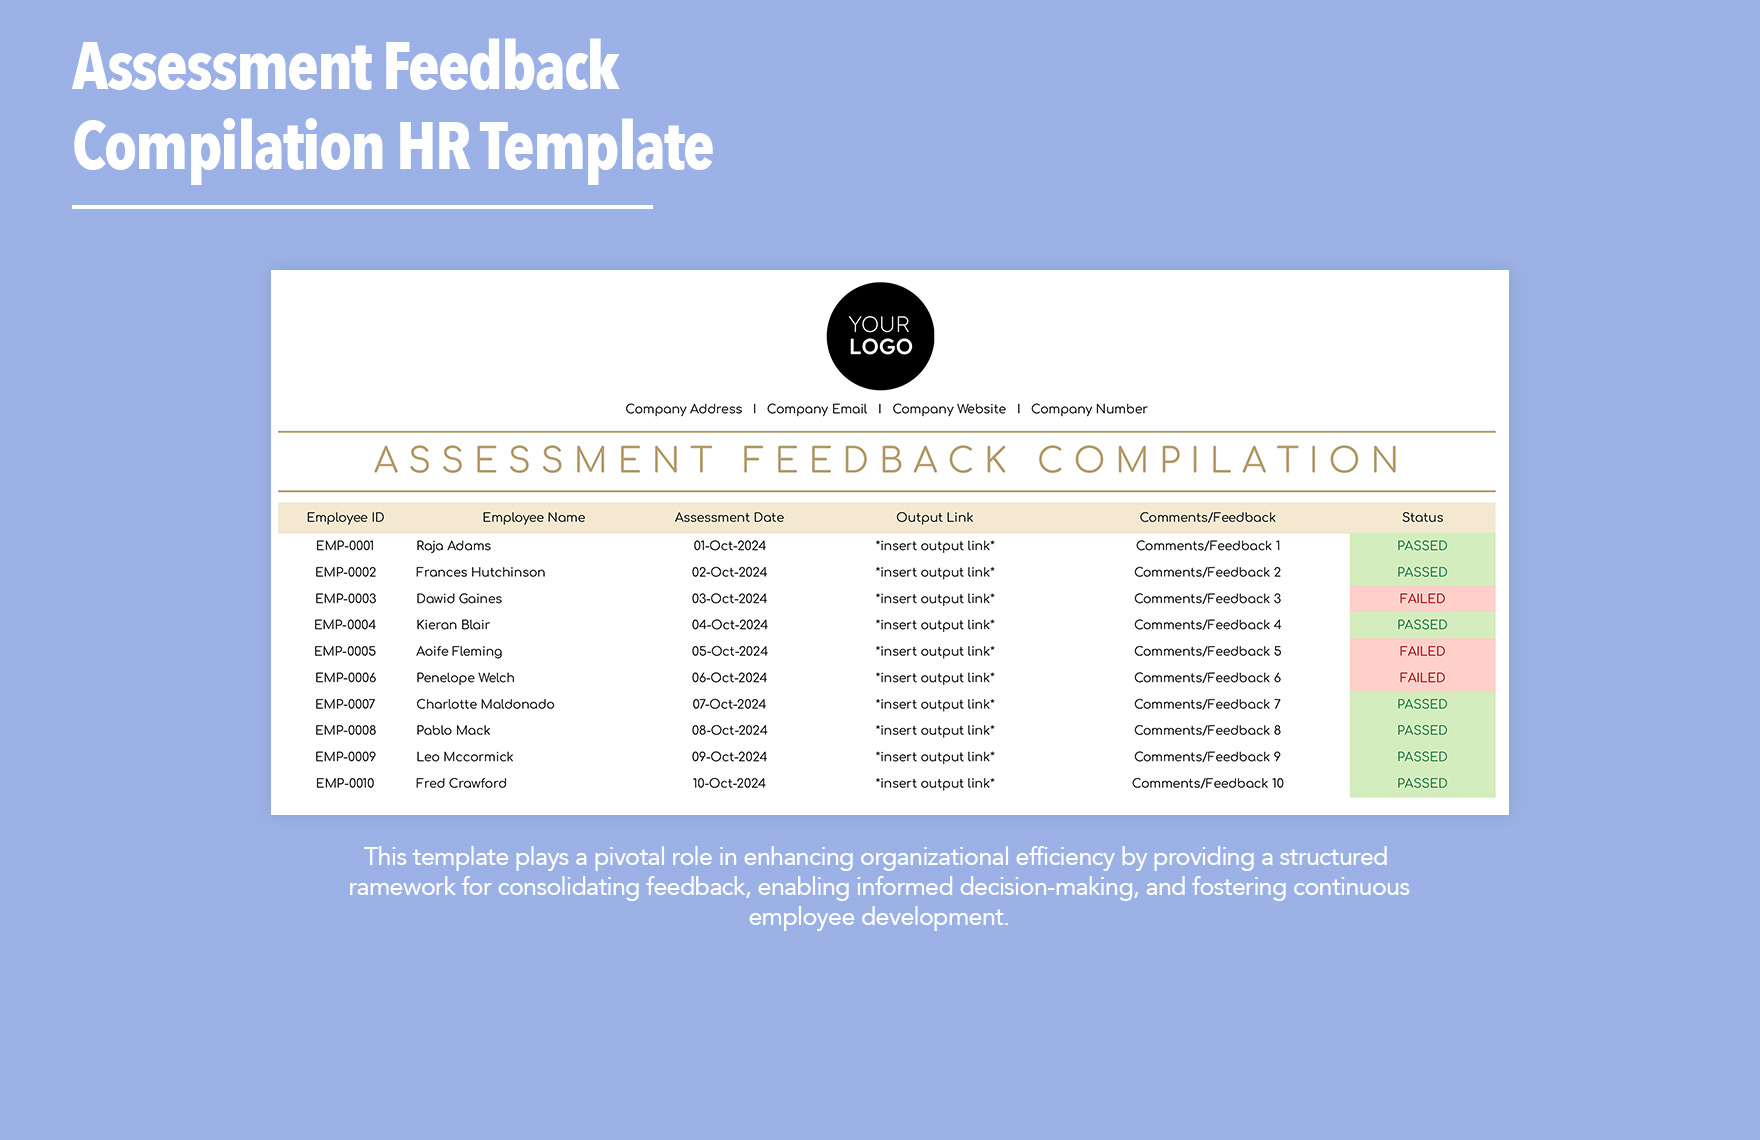 Assessment Feedback Compilation HR Template